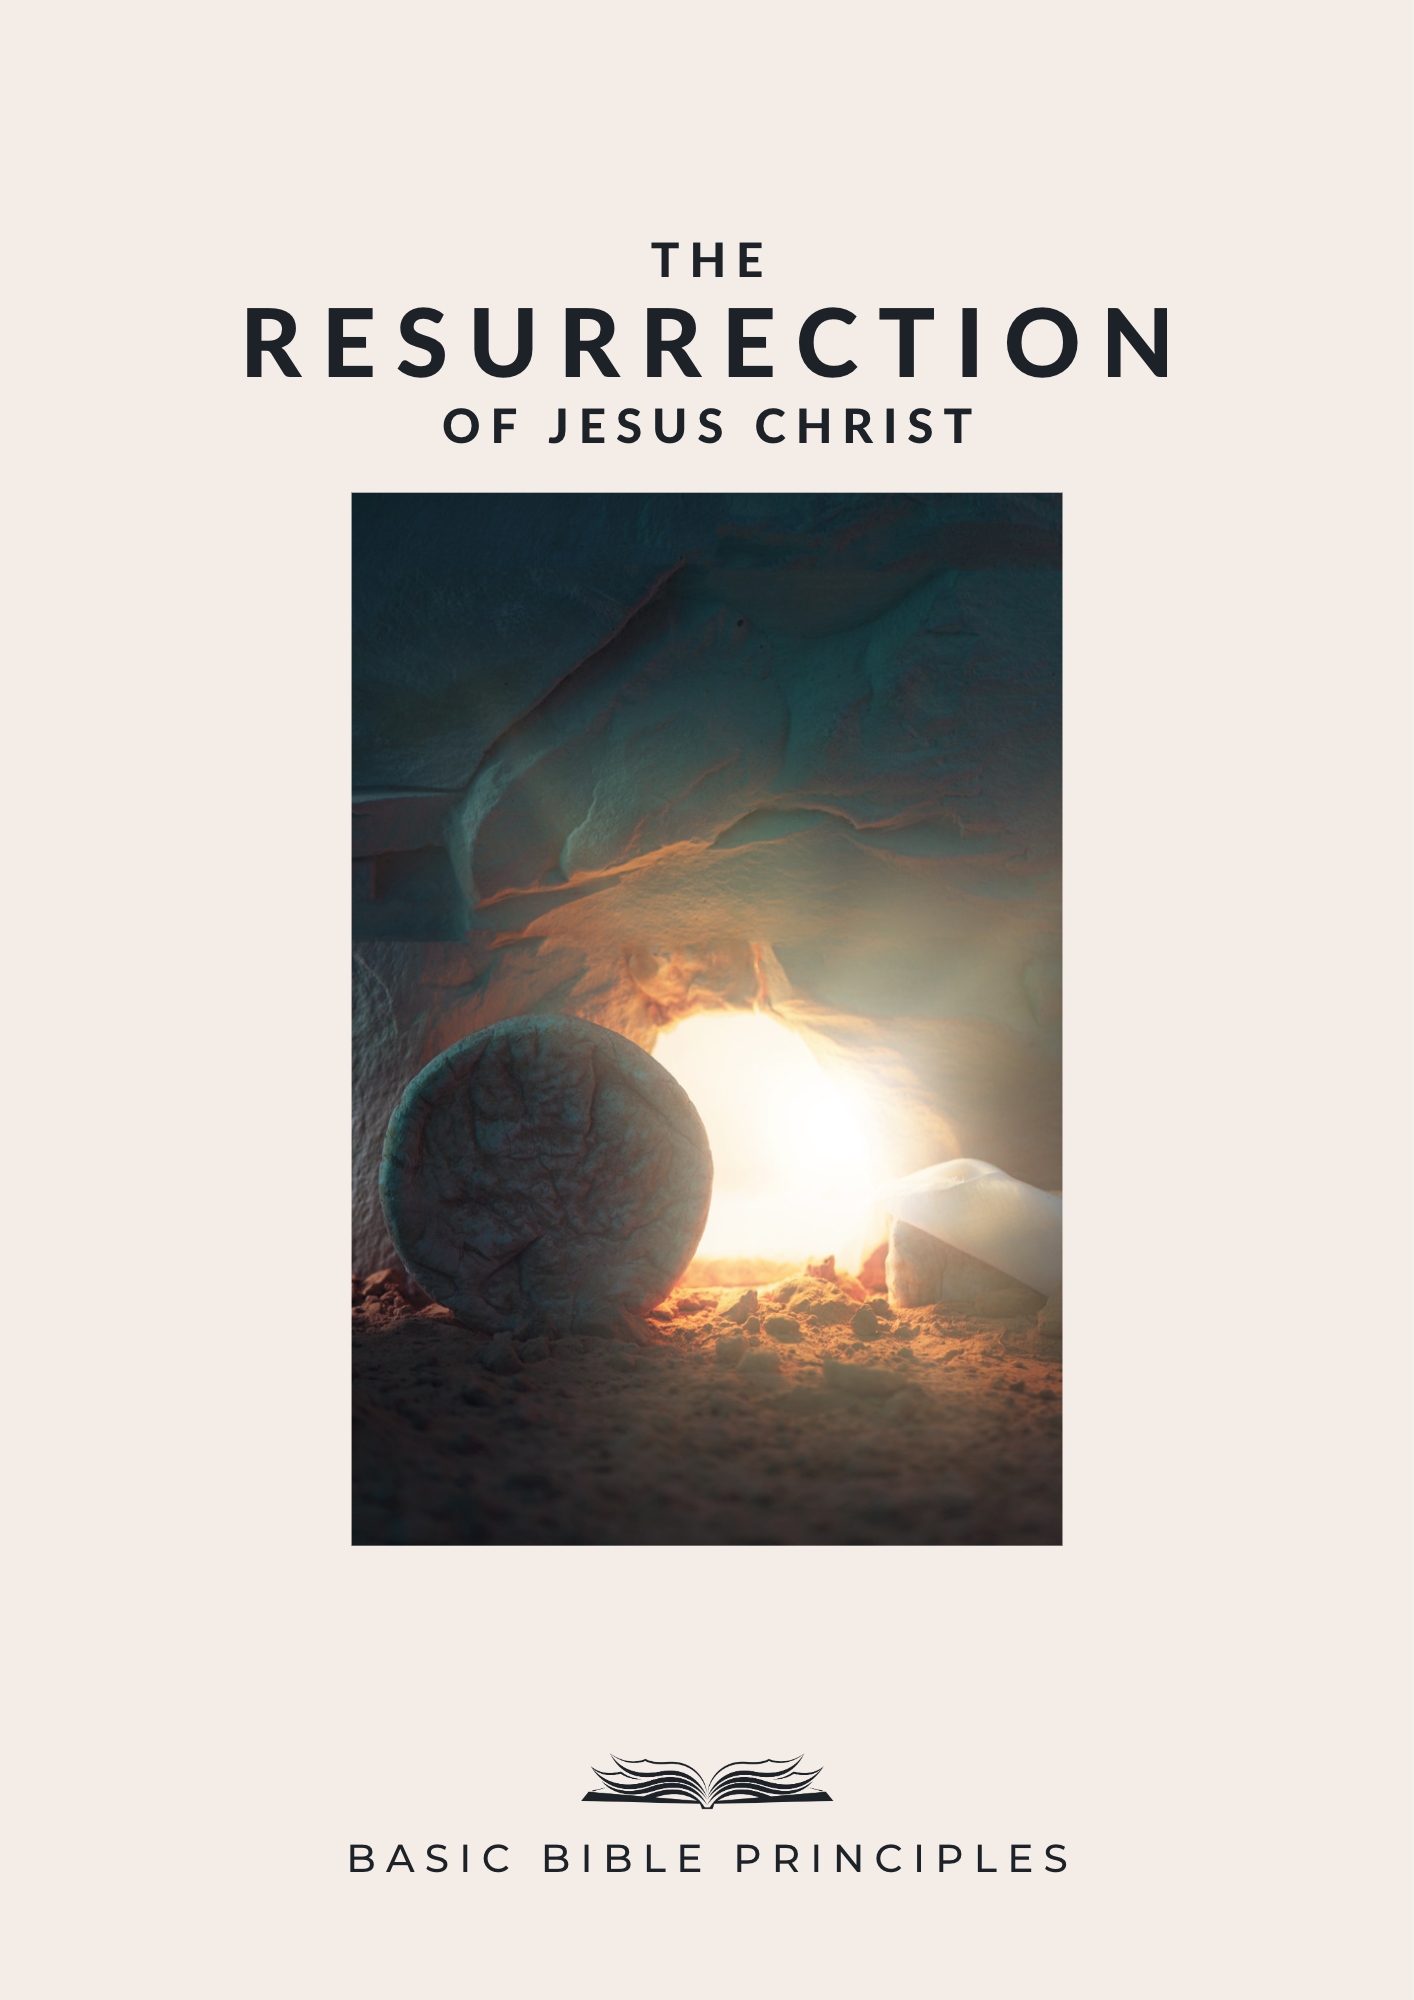 Basic Bible Principles: THE RESURRECTION OF JESUS CHRIST